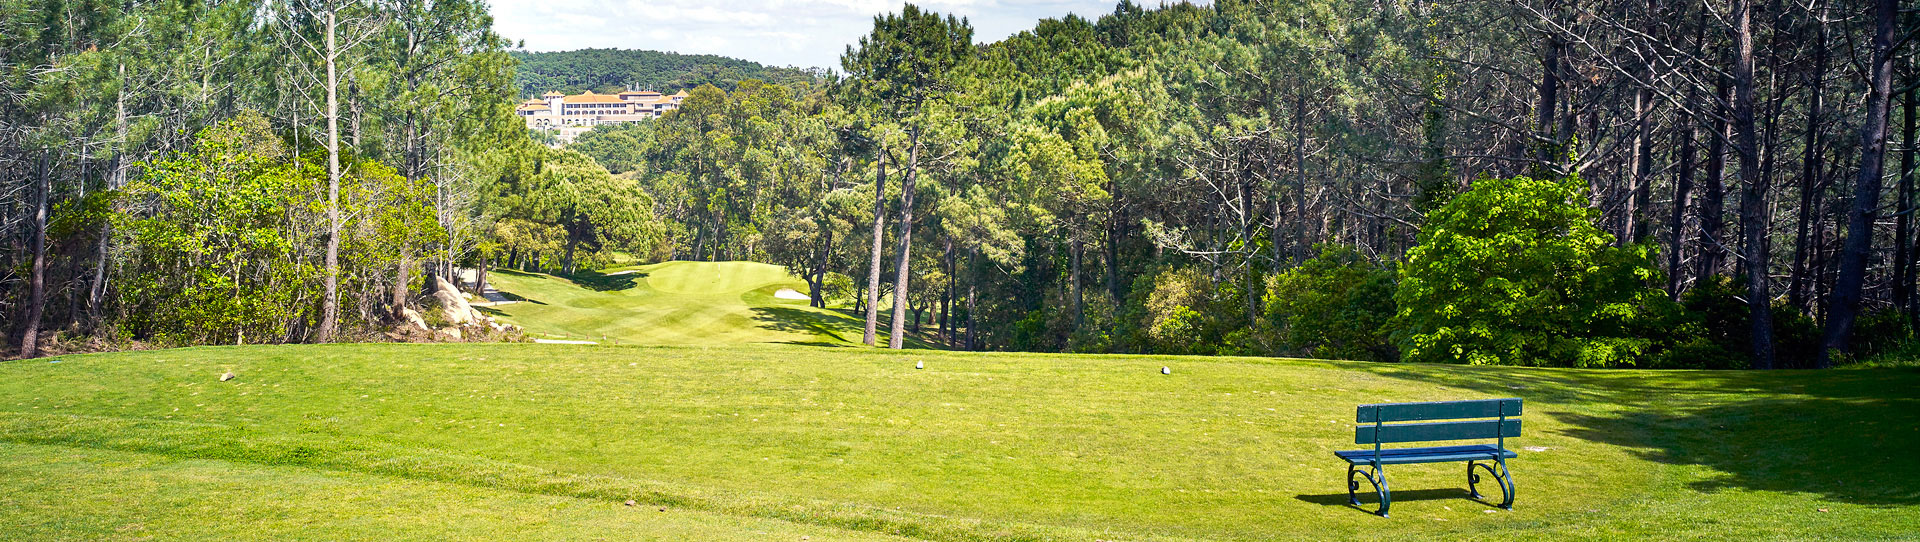 Portugal golf holidays - Penha Longa Twix Experience - Photo 3